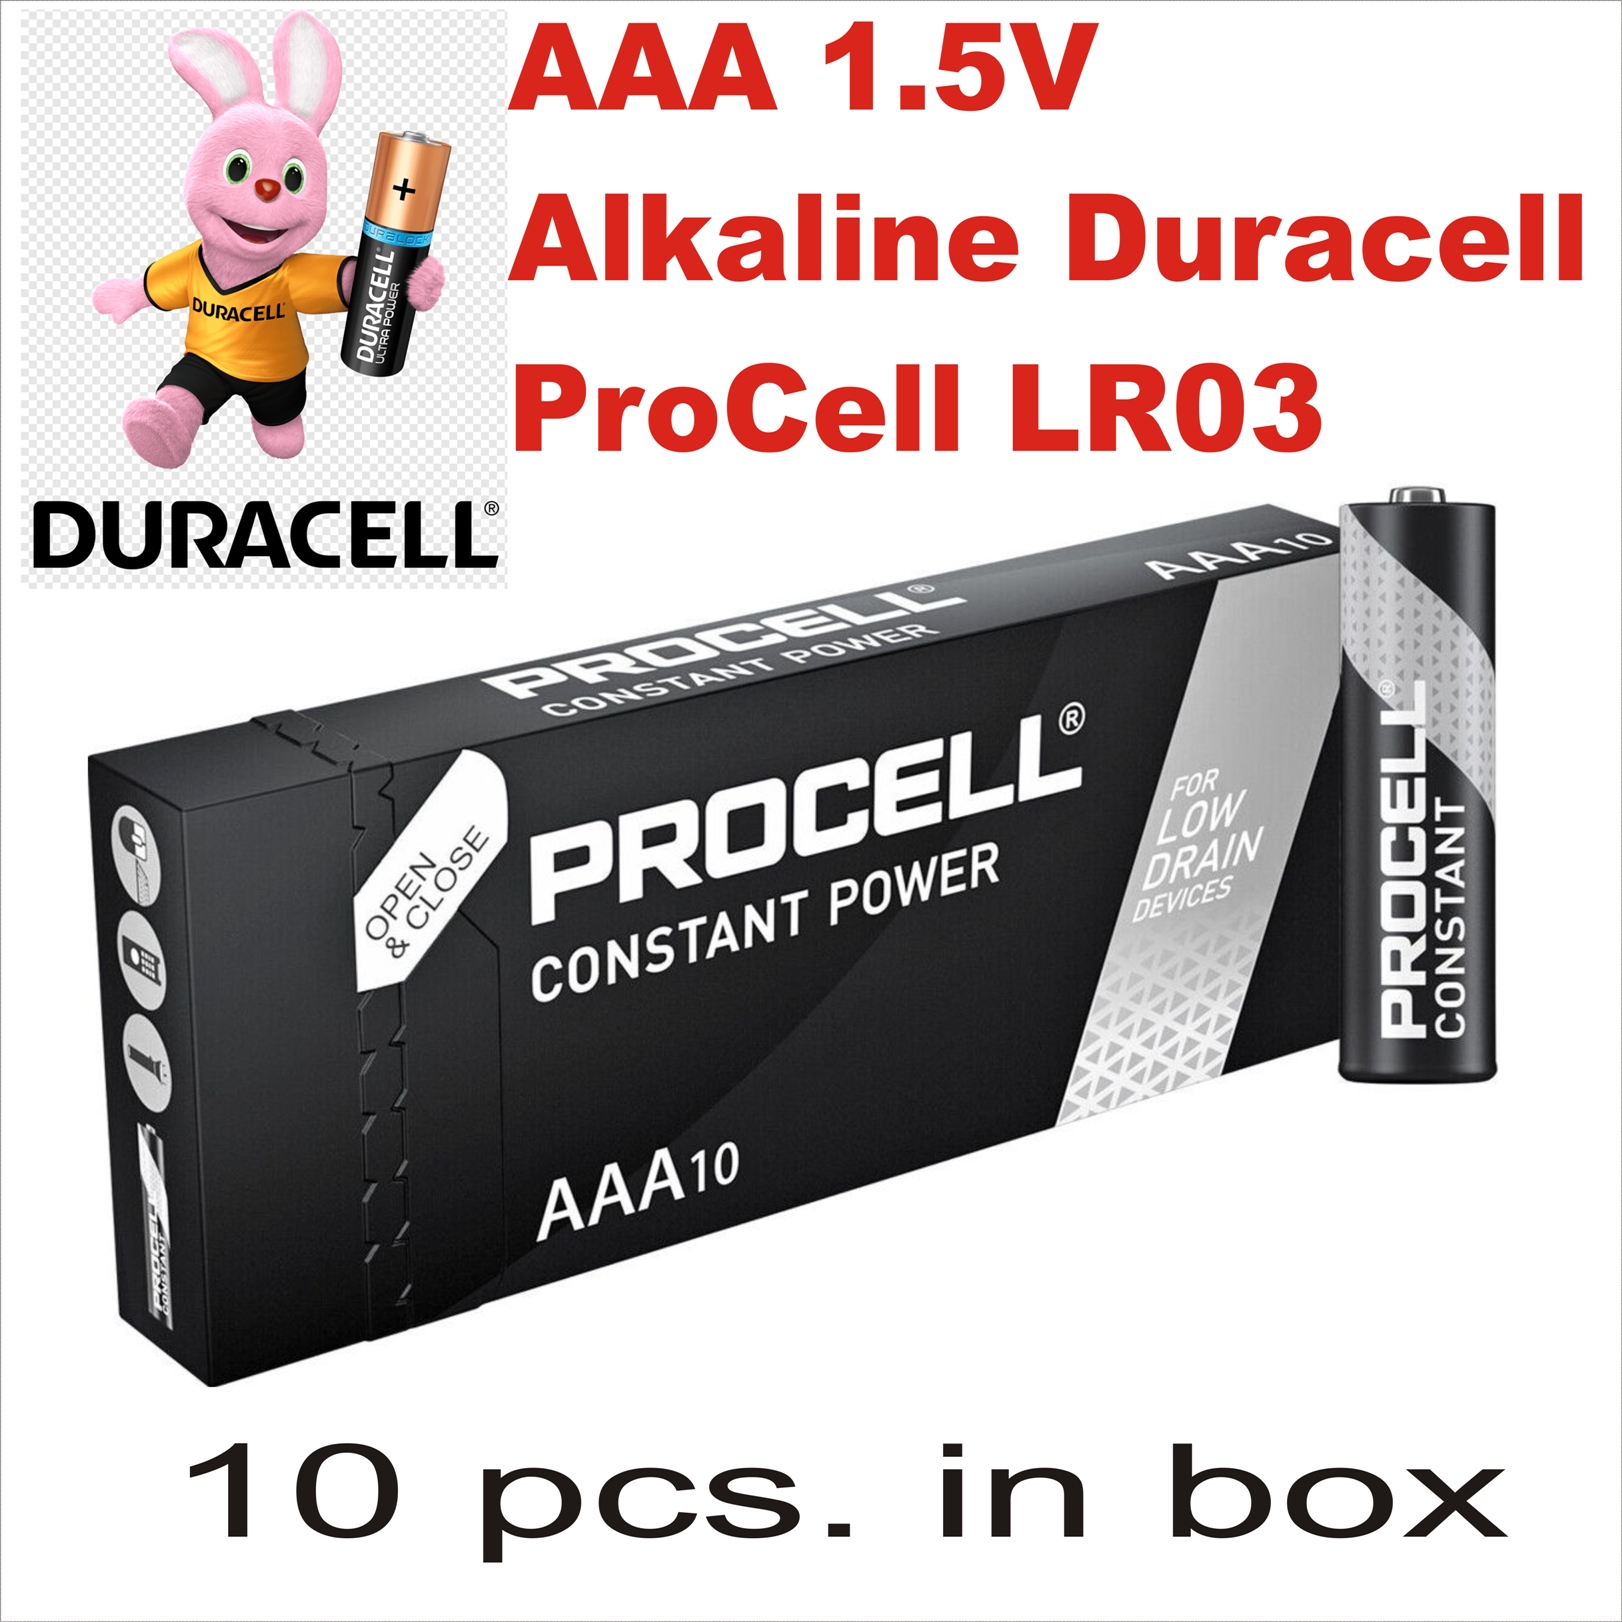 ААА 1.5V Alkaline Duracell ProCell LR03 (10бр.)